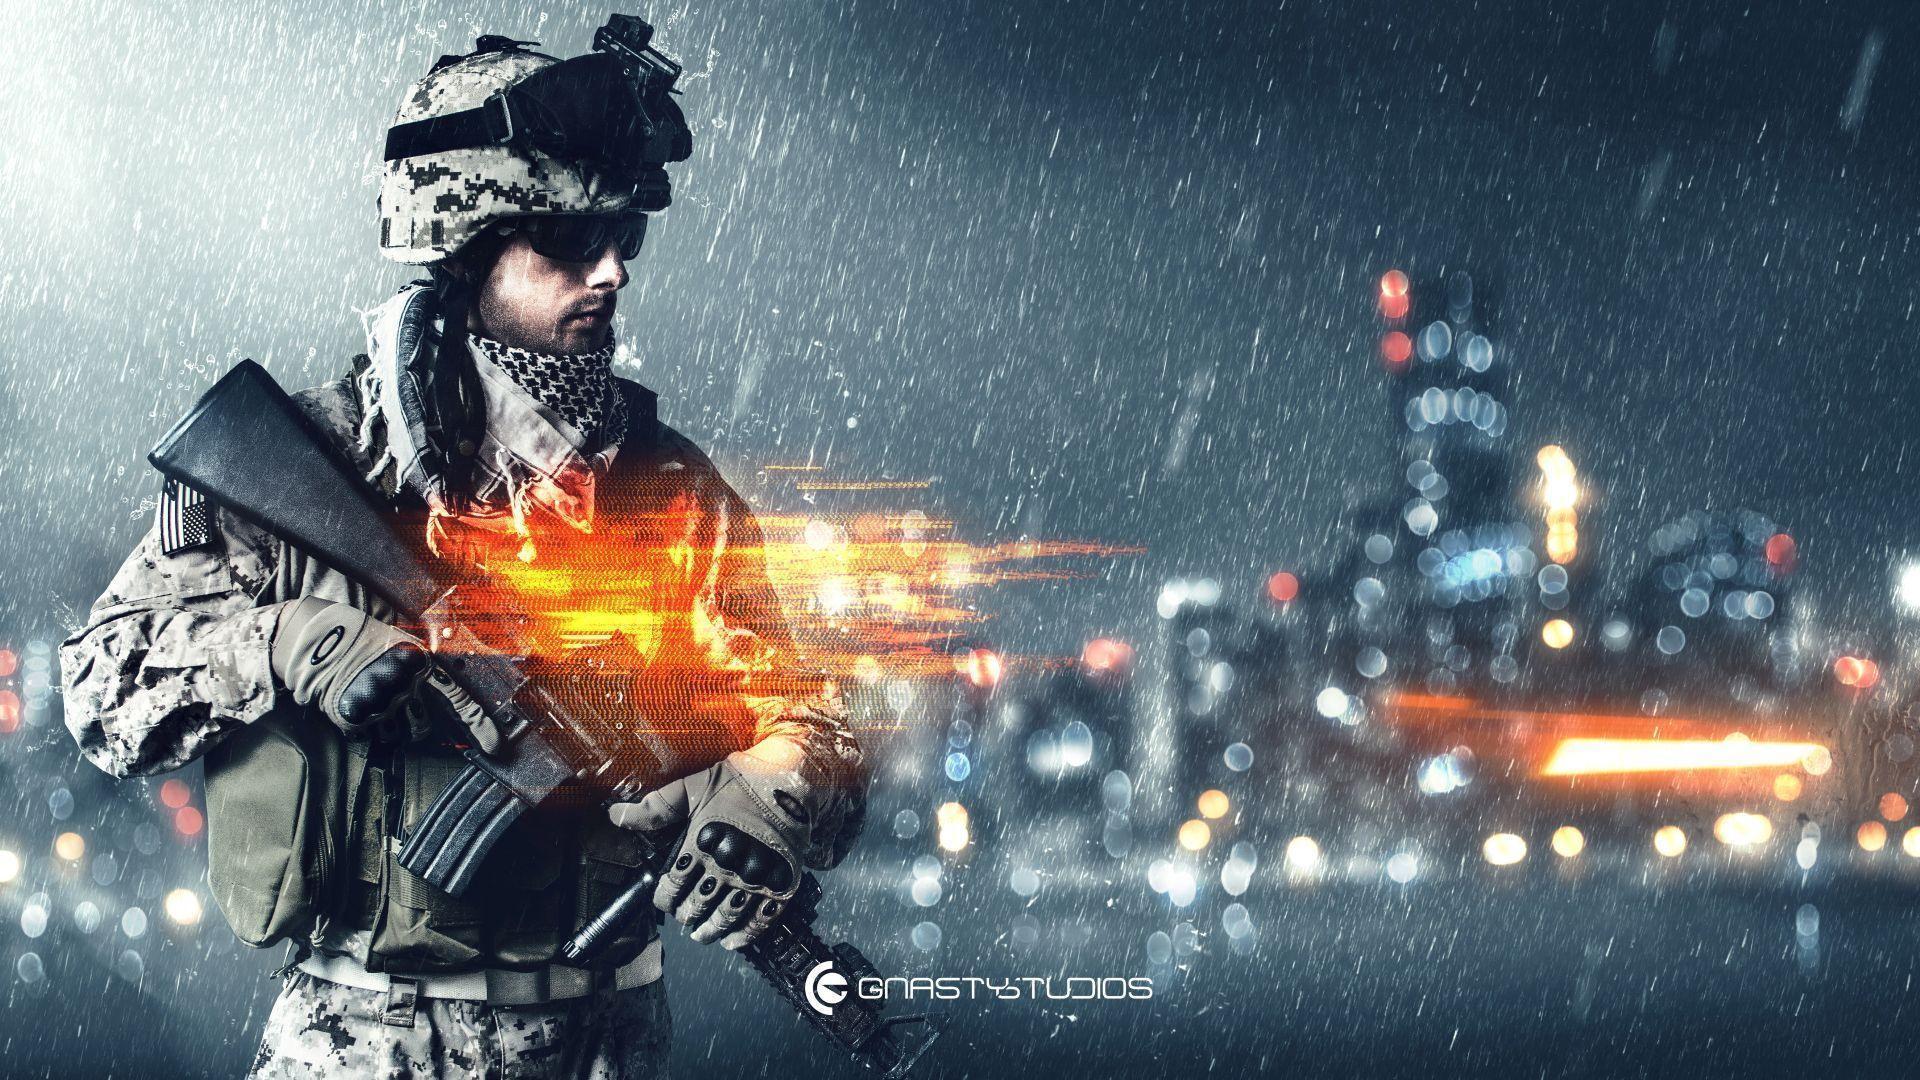 HD Battlefield 4 Wallpaper: Exclusive Games Wallpaper. HD